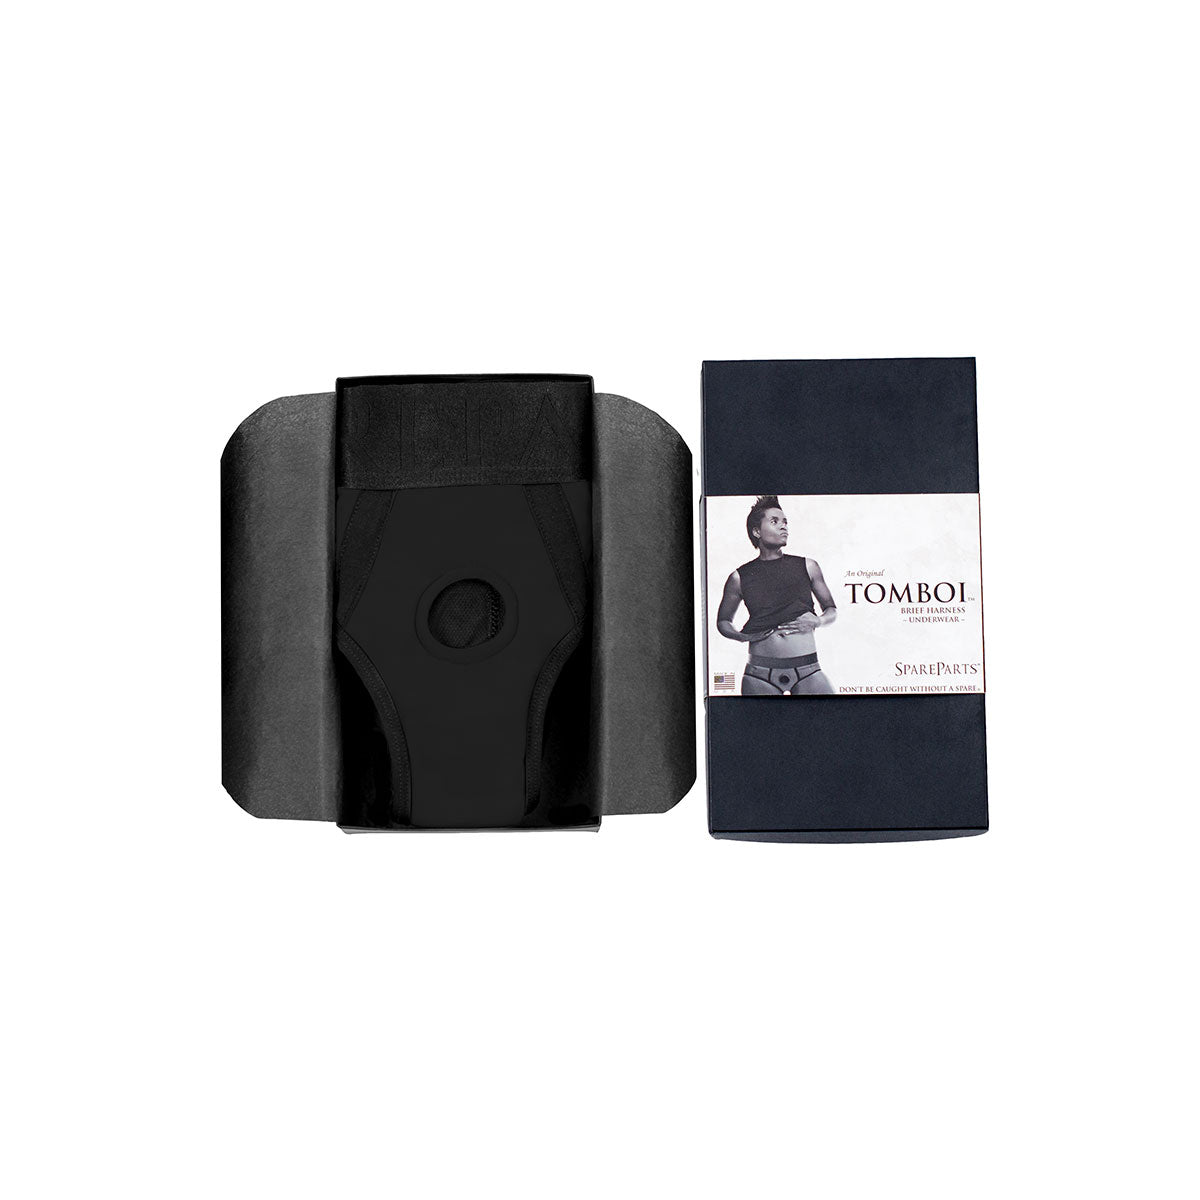 SpareParts Tomboi Harness Black/Black Nylon - 3X